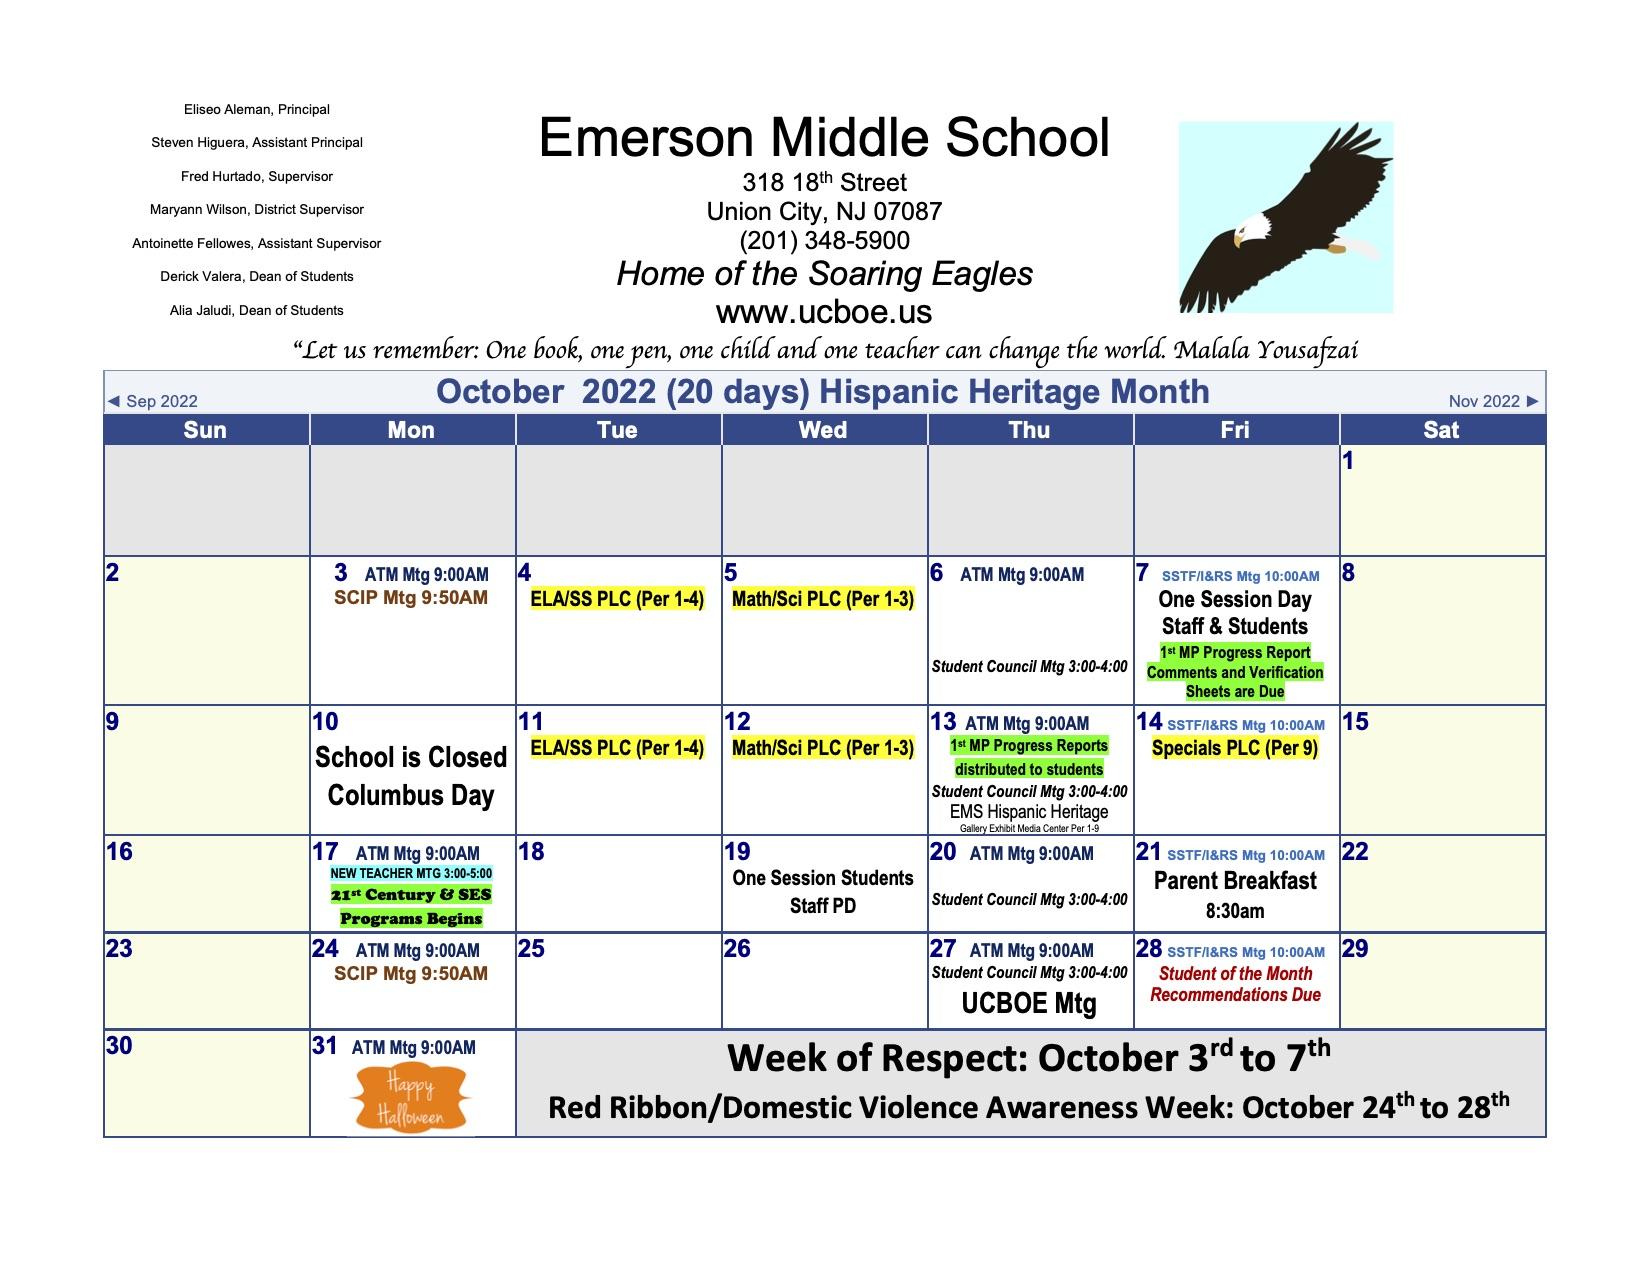 Emerson Middle School-October 2022 Calendar